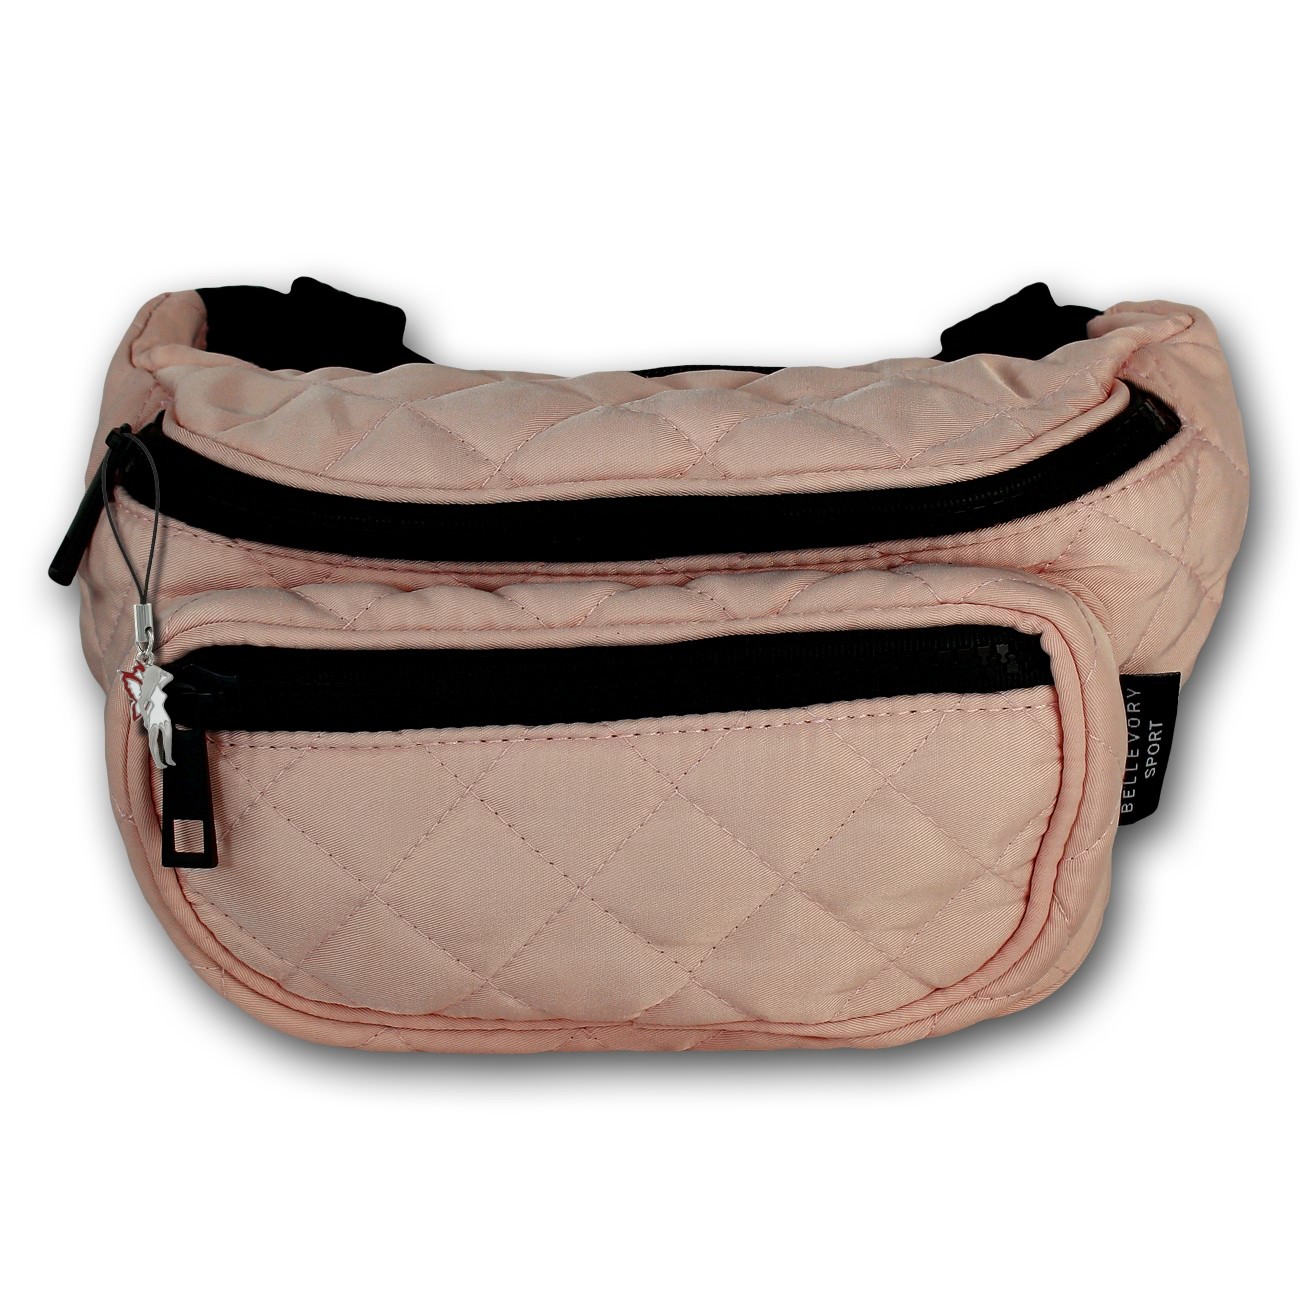 New Bags sportliche gesteppte Gürteltasche - too cool for you - rosa OTD5026A